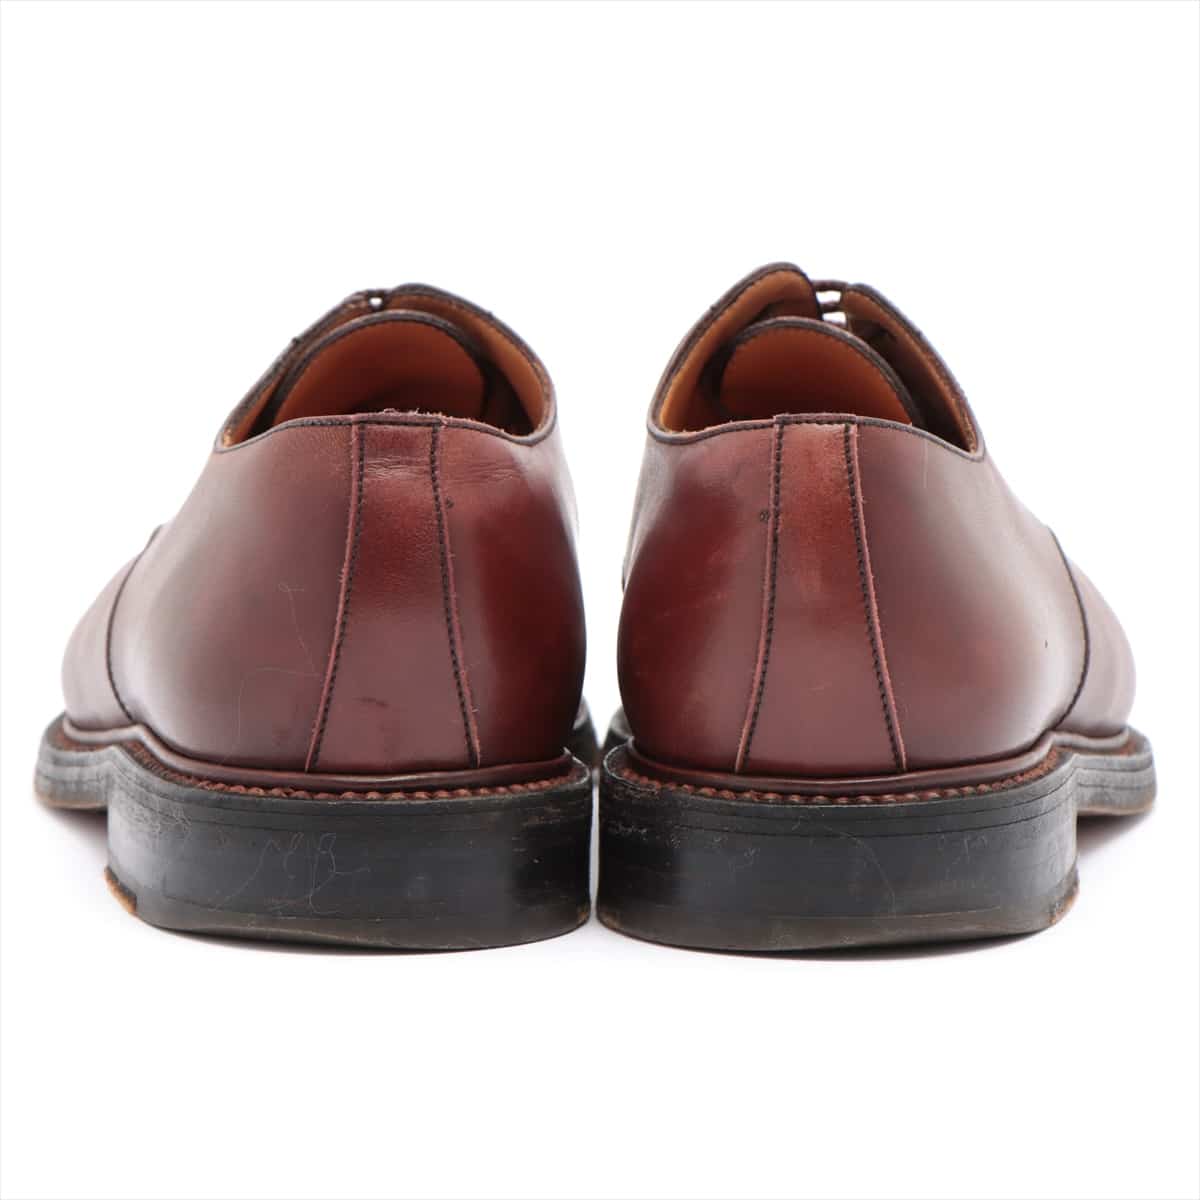 J. M. Weston Leather Leather shoes 7D Men's Brown 598 Roger U-chip